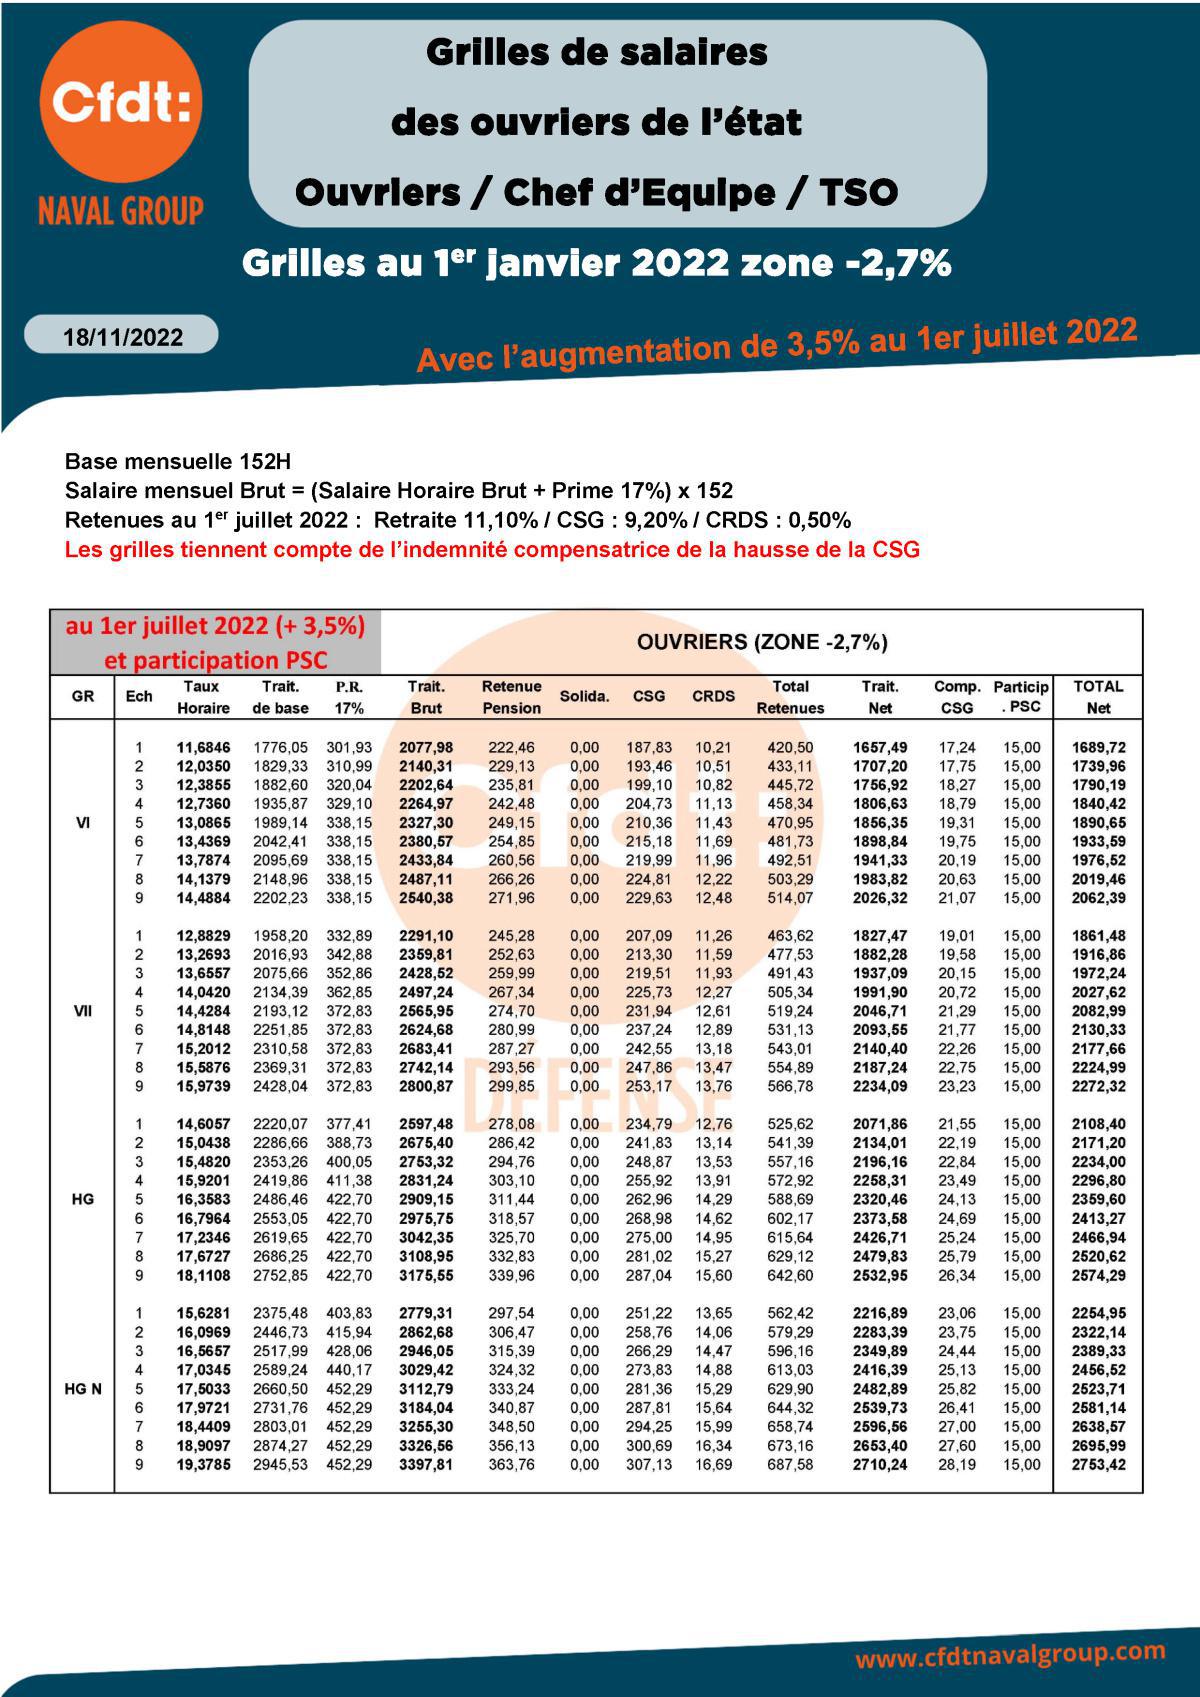 Grilles PMAD 2022 zone -2,7%